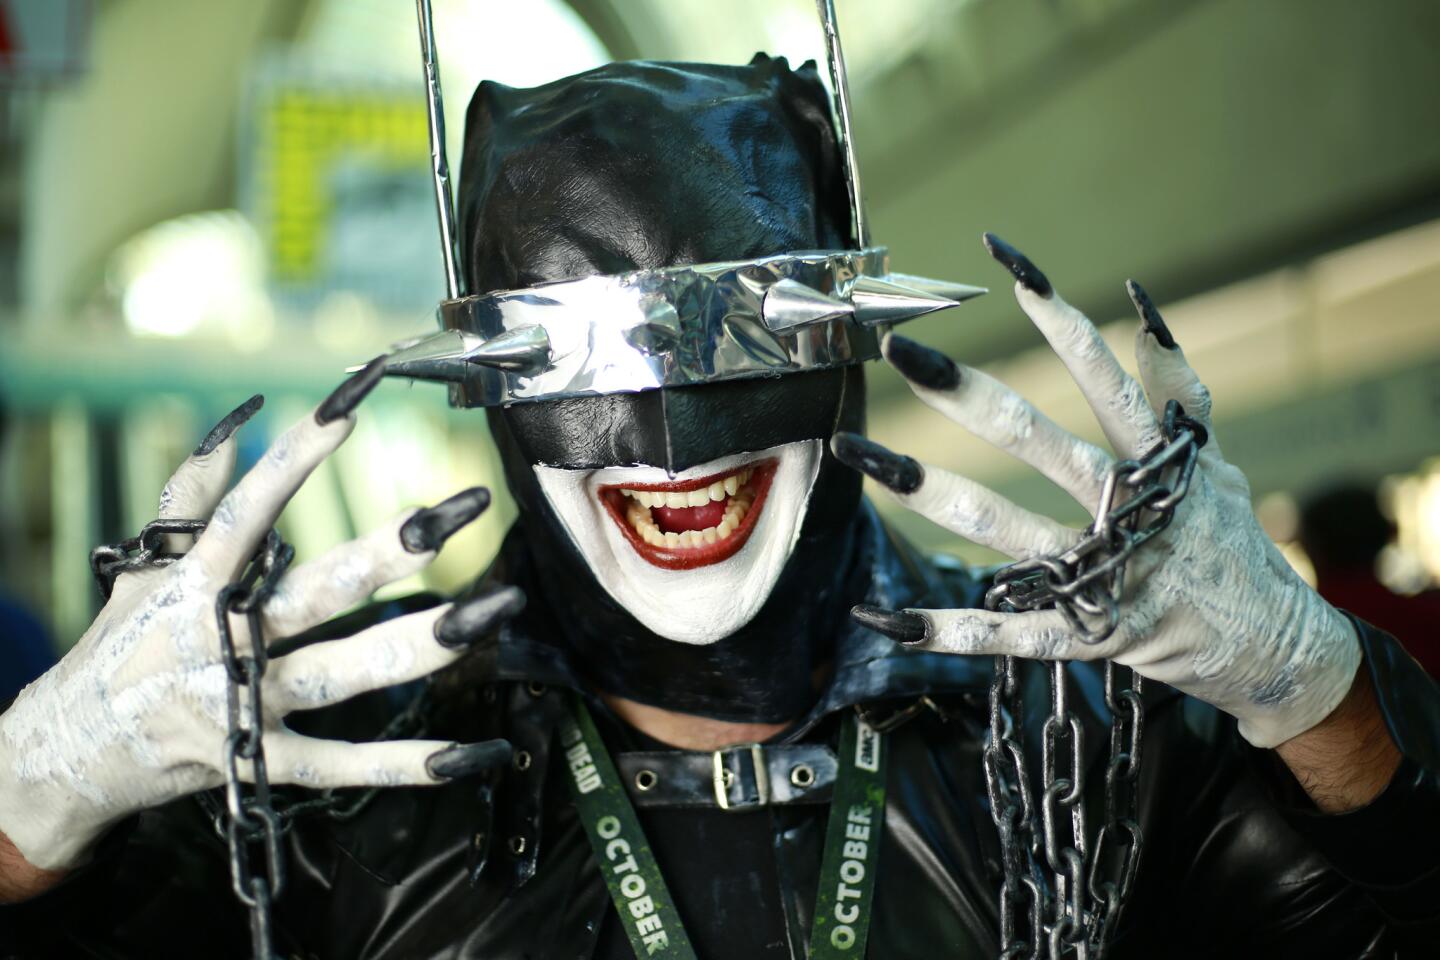 Robert Soto of Lawndale dressed as Batman.